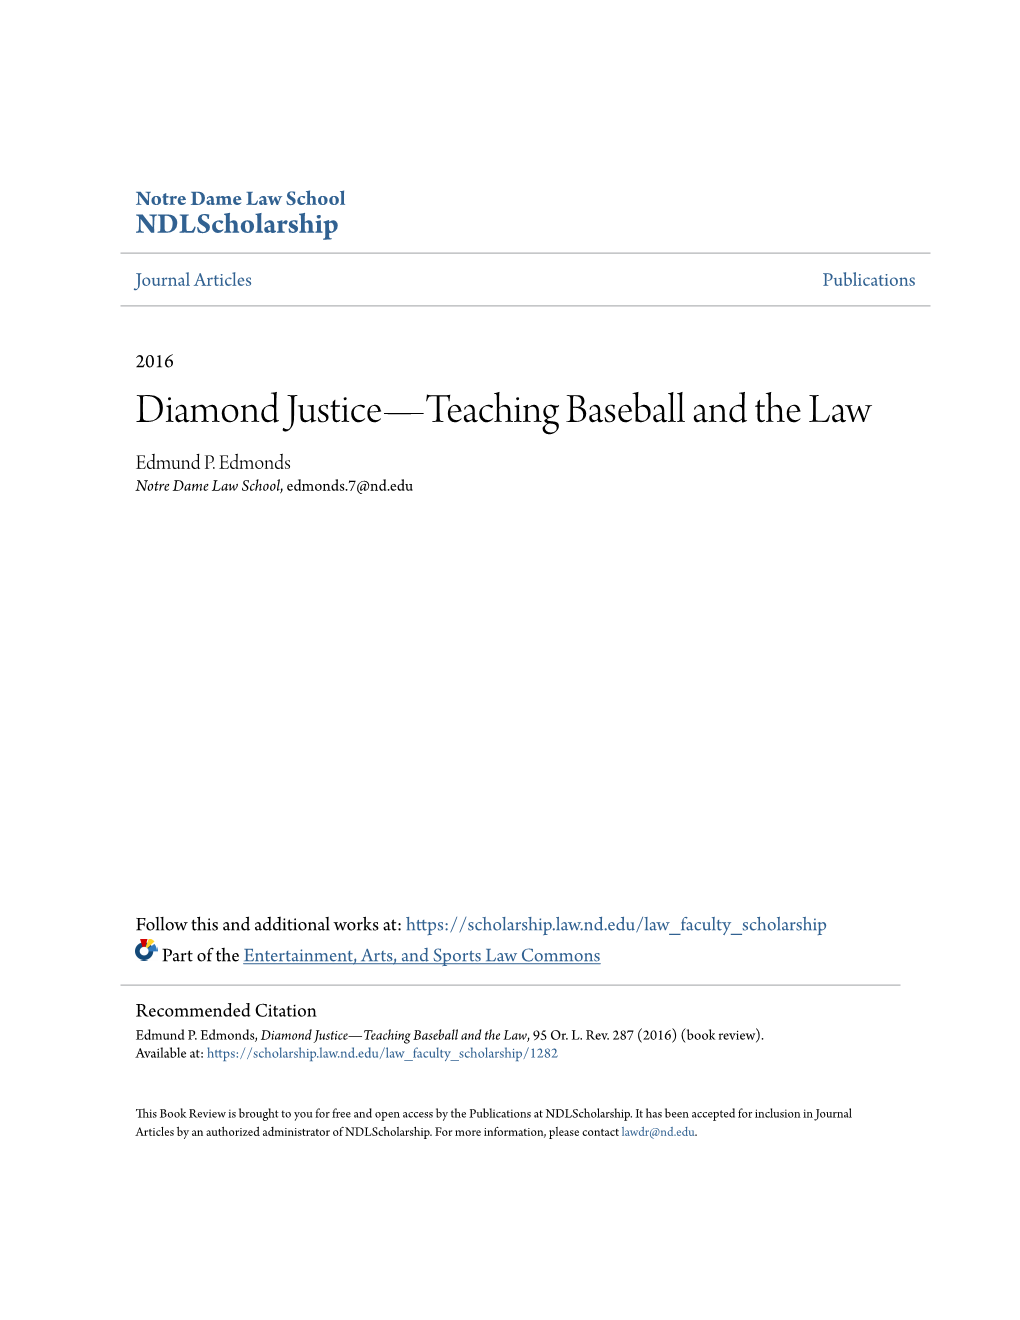 Diamond Justice—Teaching Baseball and the Law Edmund P